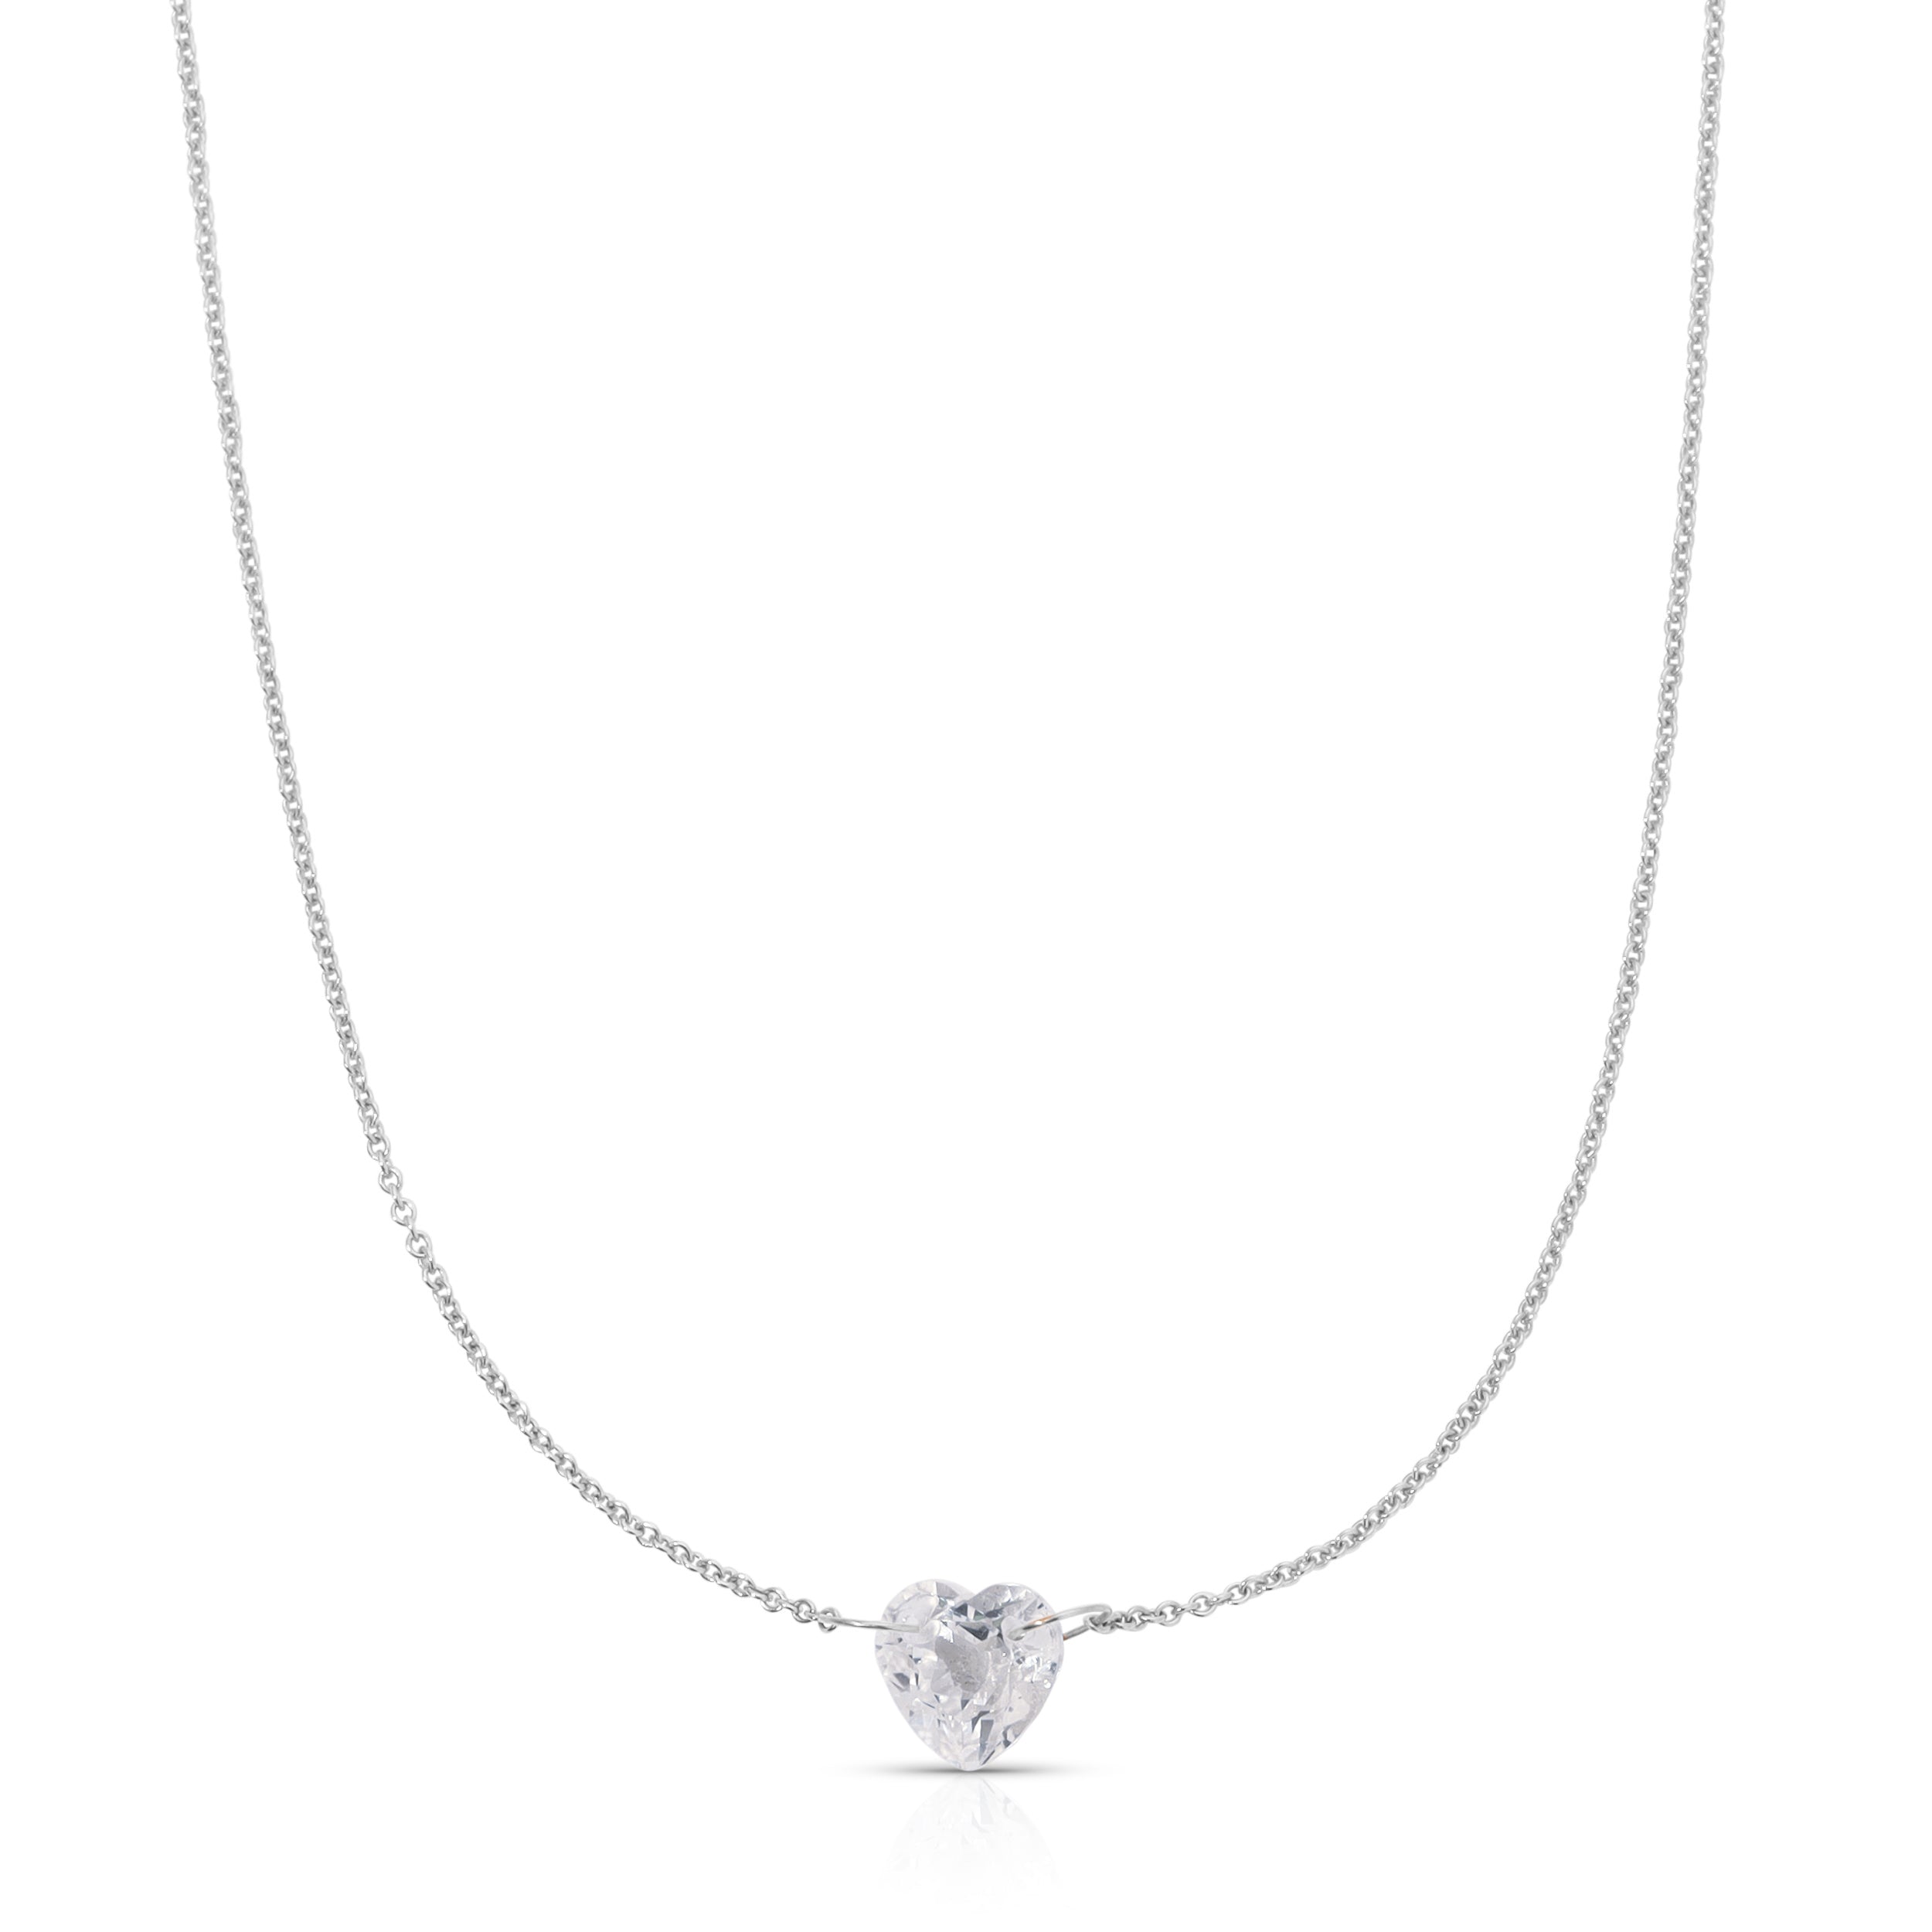 Emerald Cut Sapphire Necklace in White Gold | KLENOTA